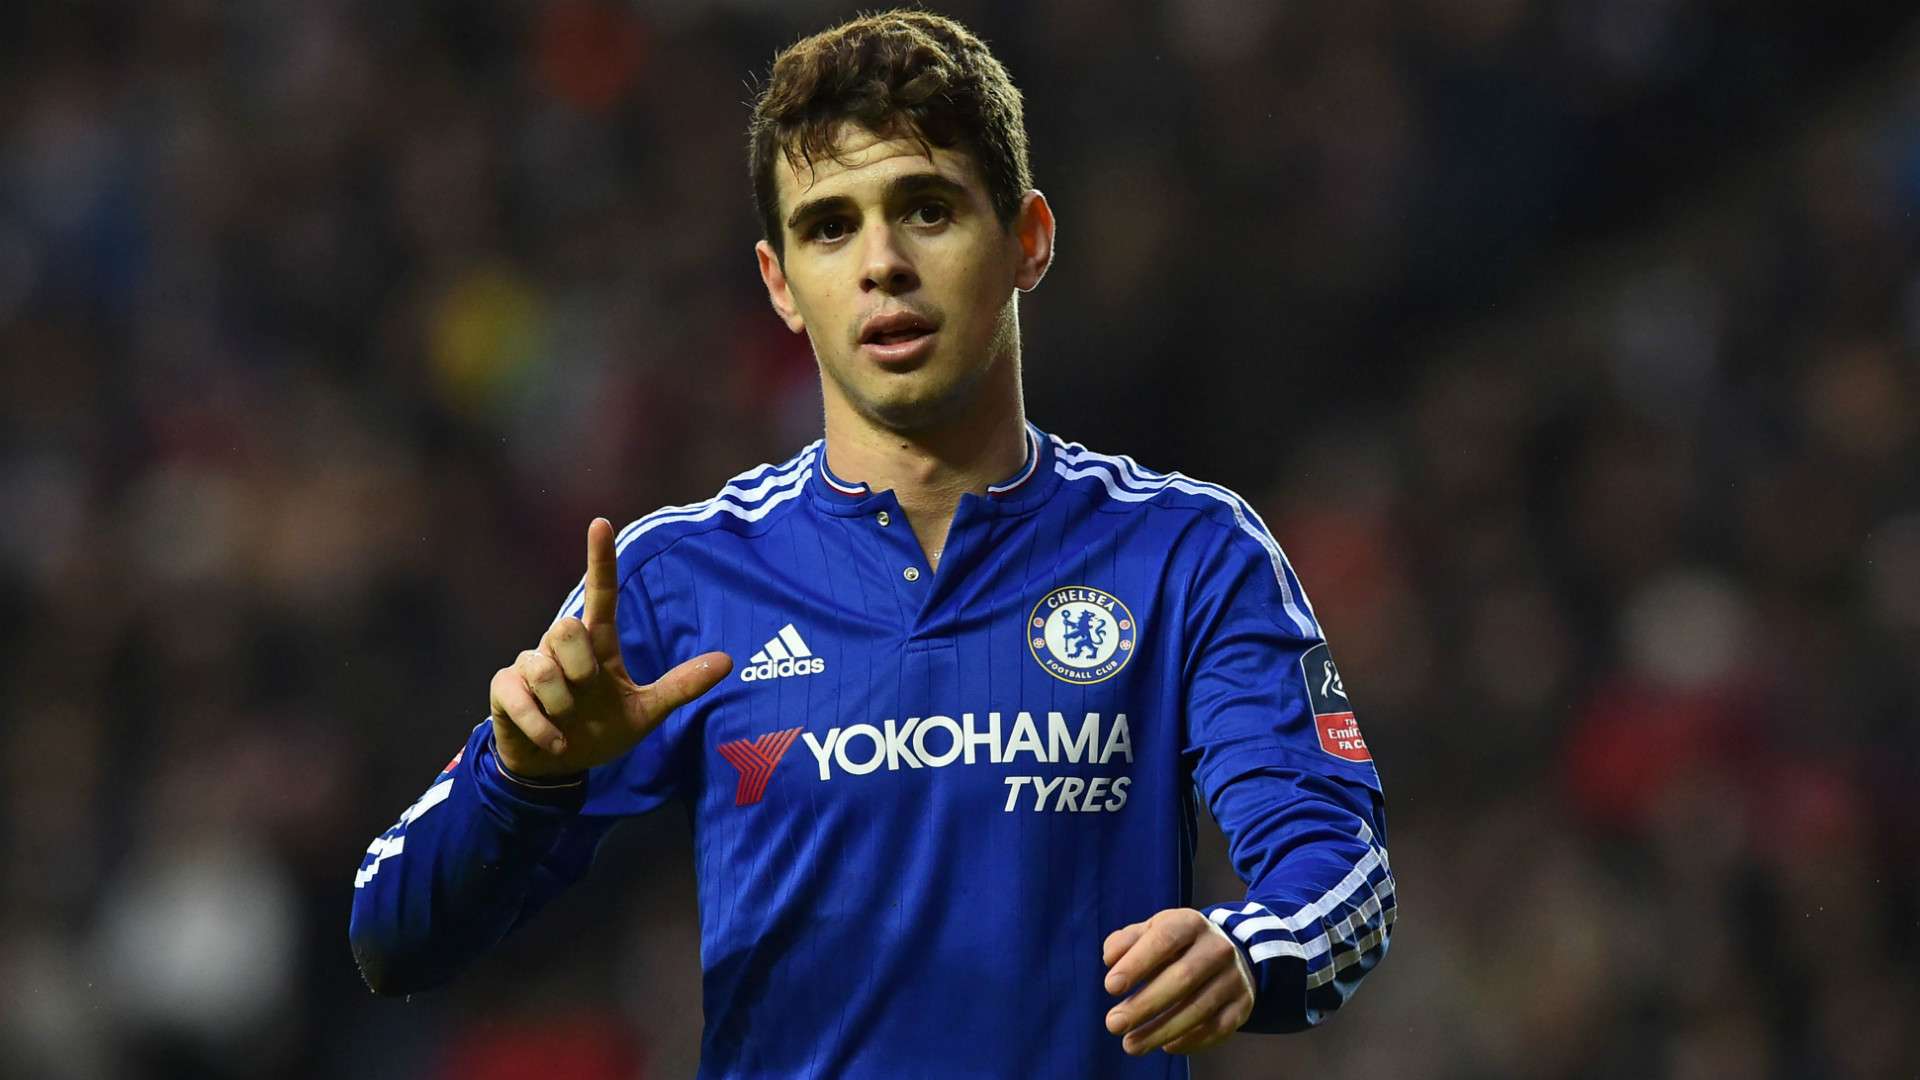 Chelsea is interested in bringing Oscar back